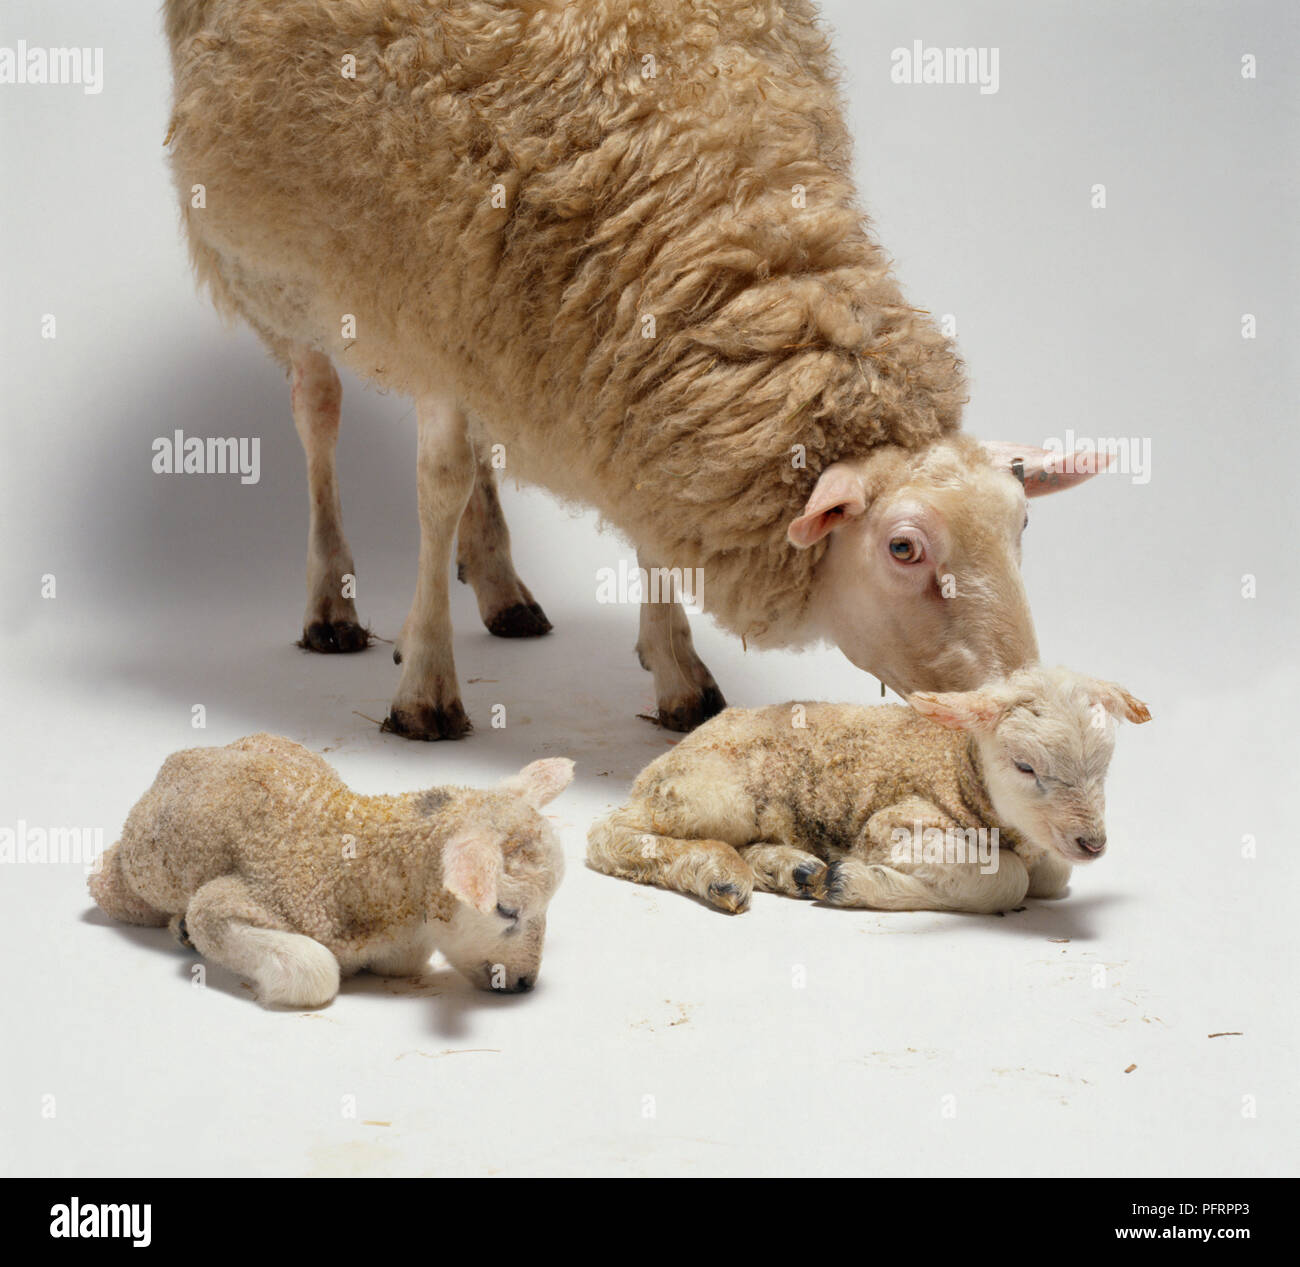 Ewe standing behind newborn twin lambs, looking down Stock Photo